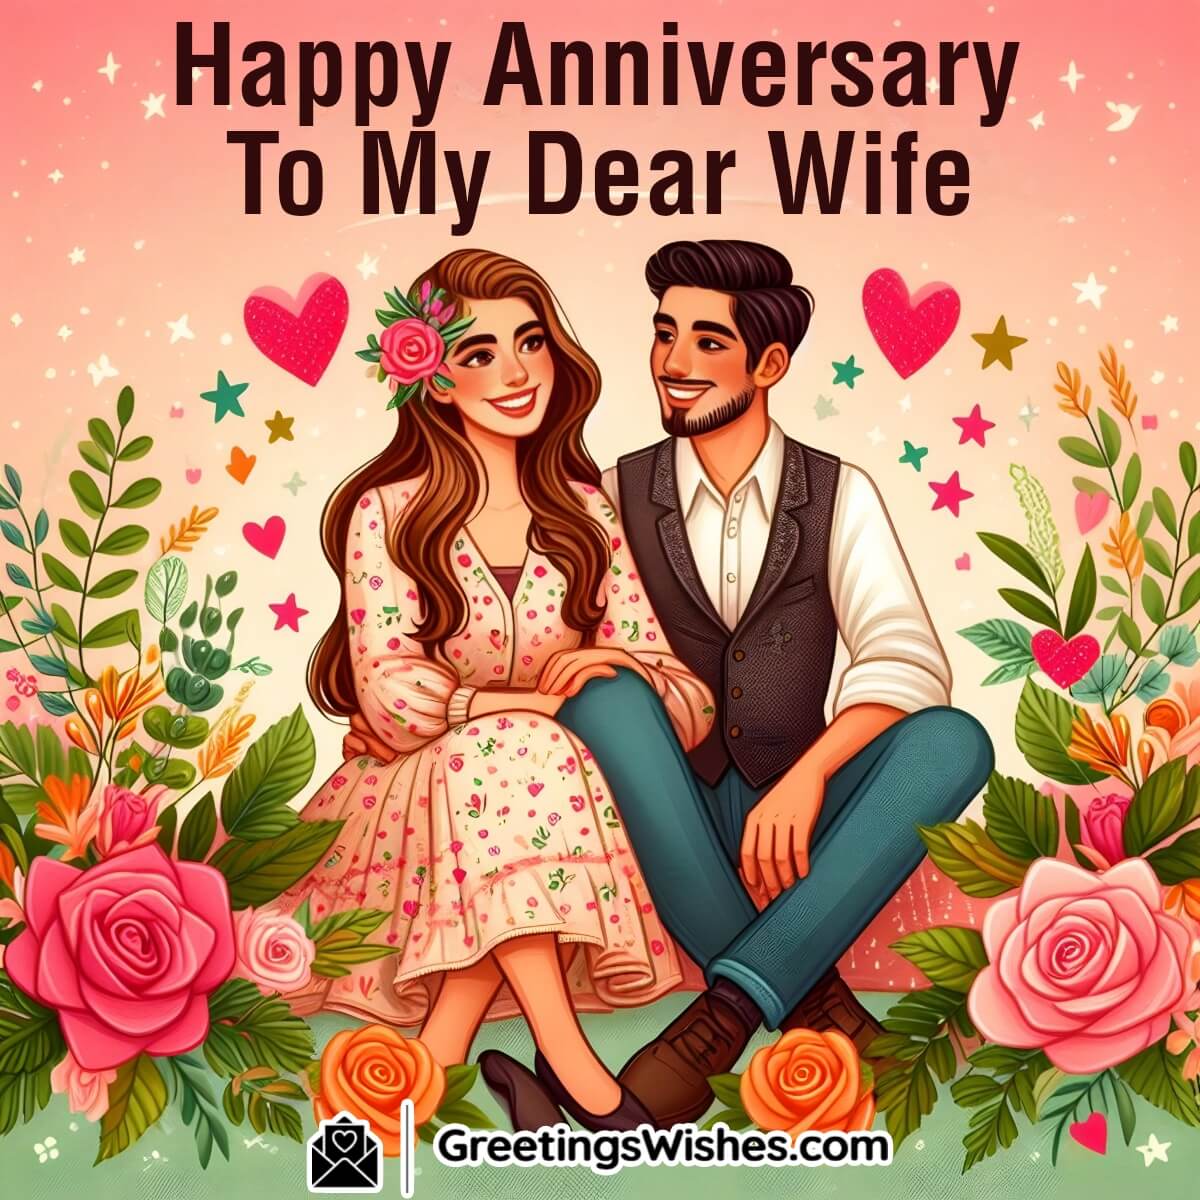 Happy Anniversary To My Dear Wife